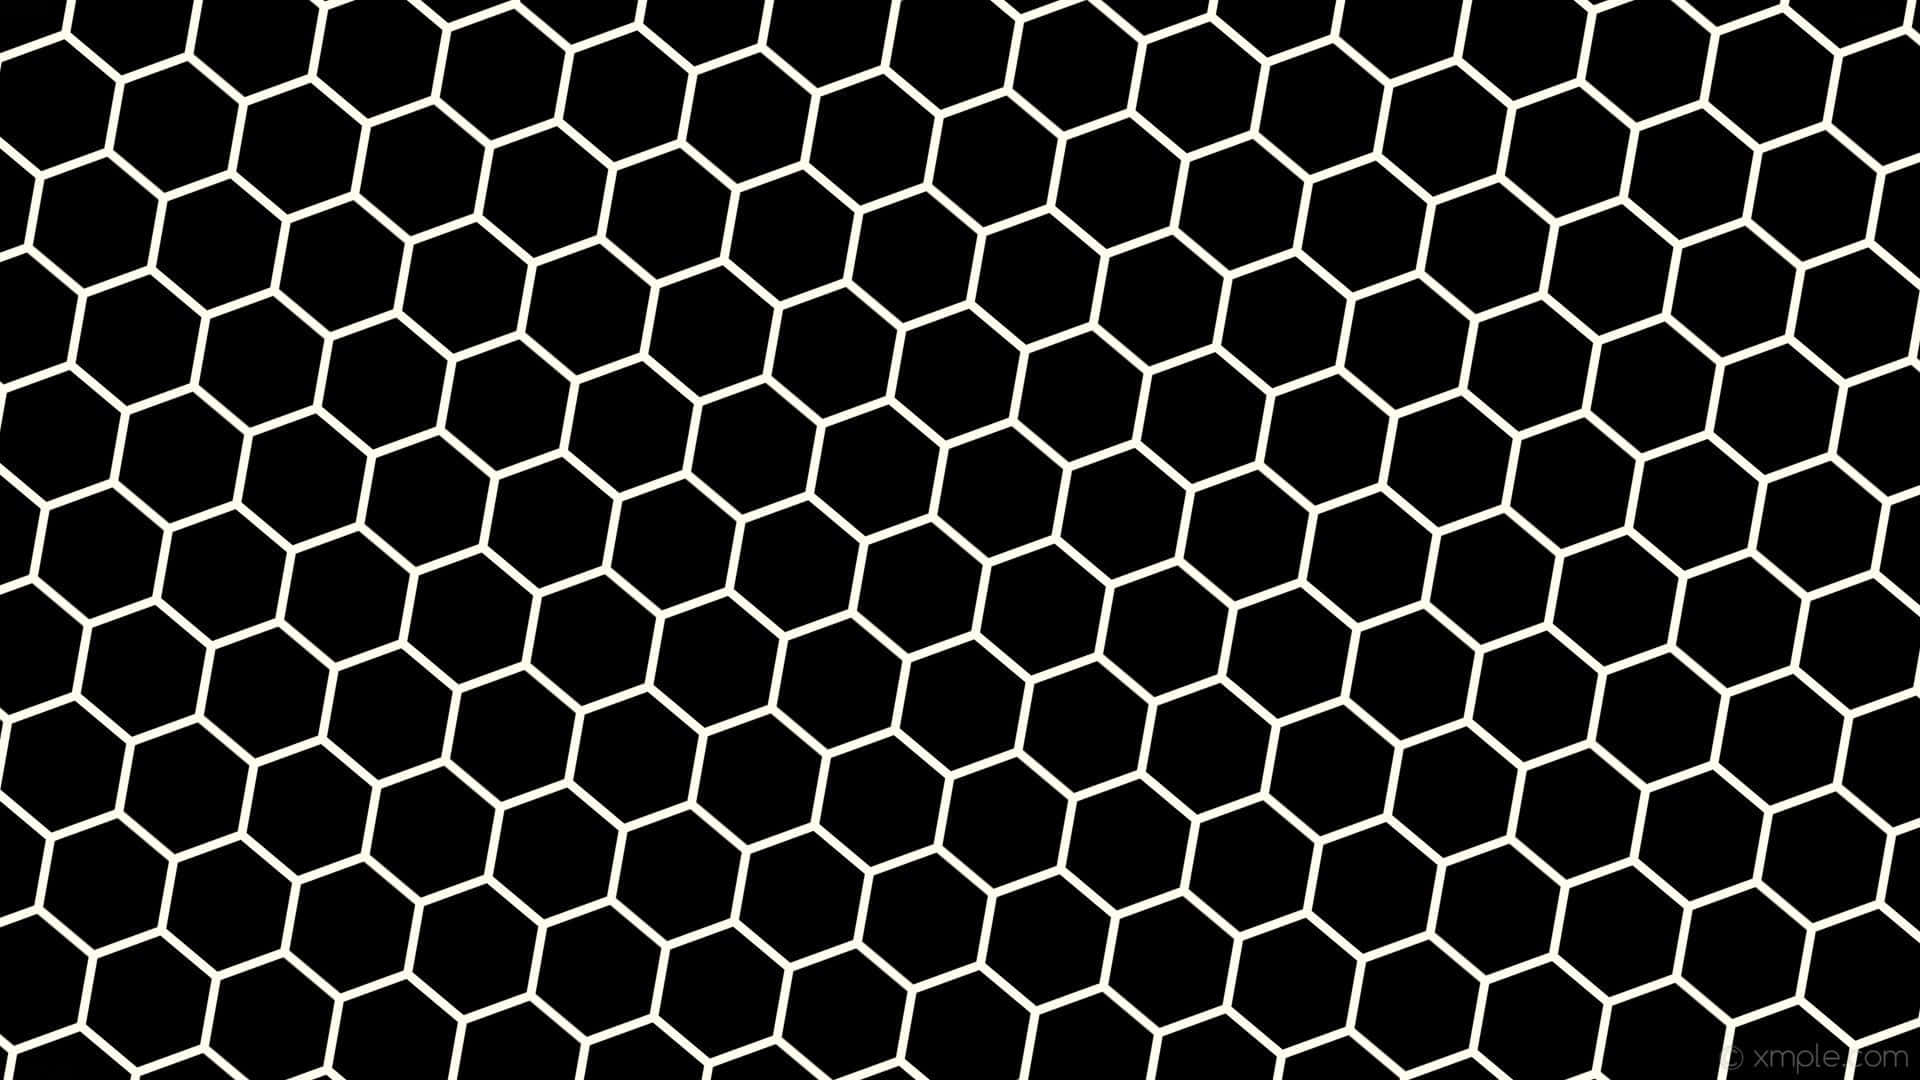 Image  A yellow honeycomb pattern background